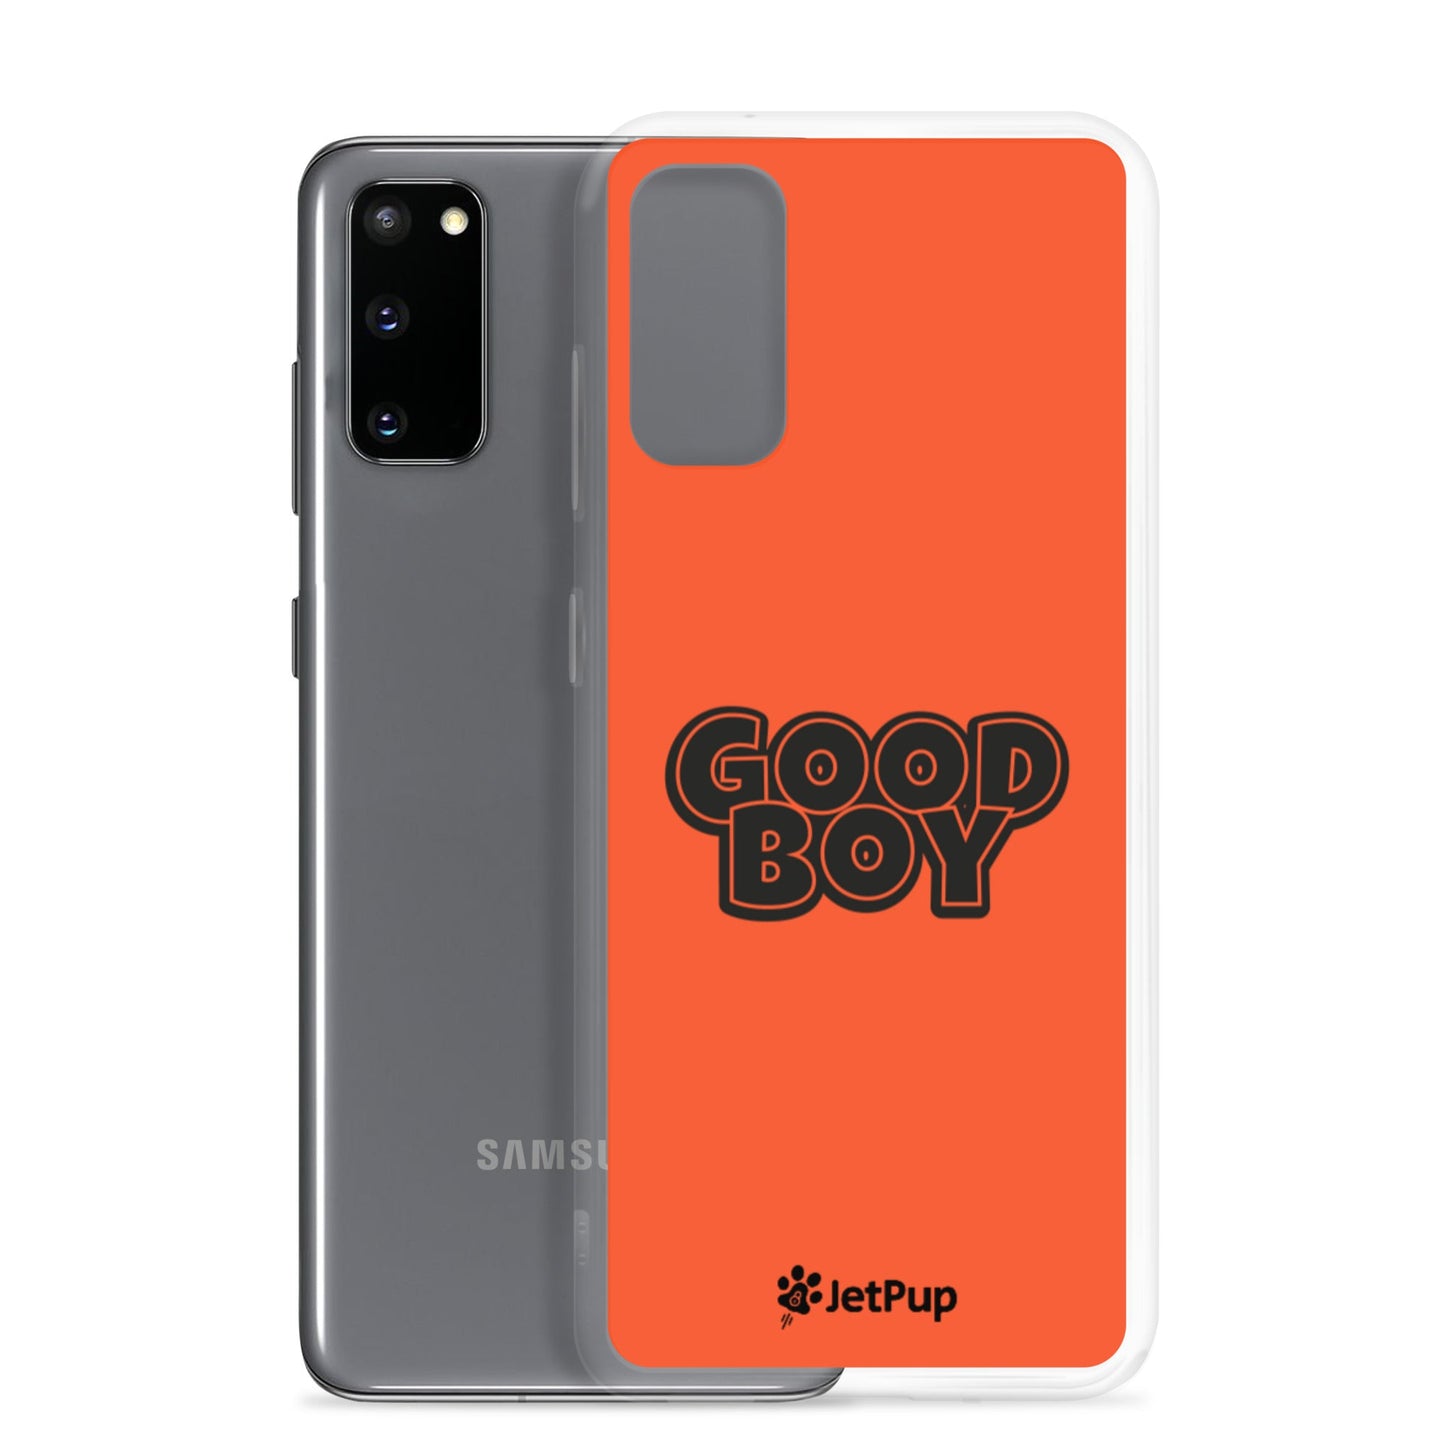 Good Boy Samsung Case - Orange - JetPup